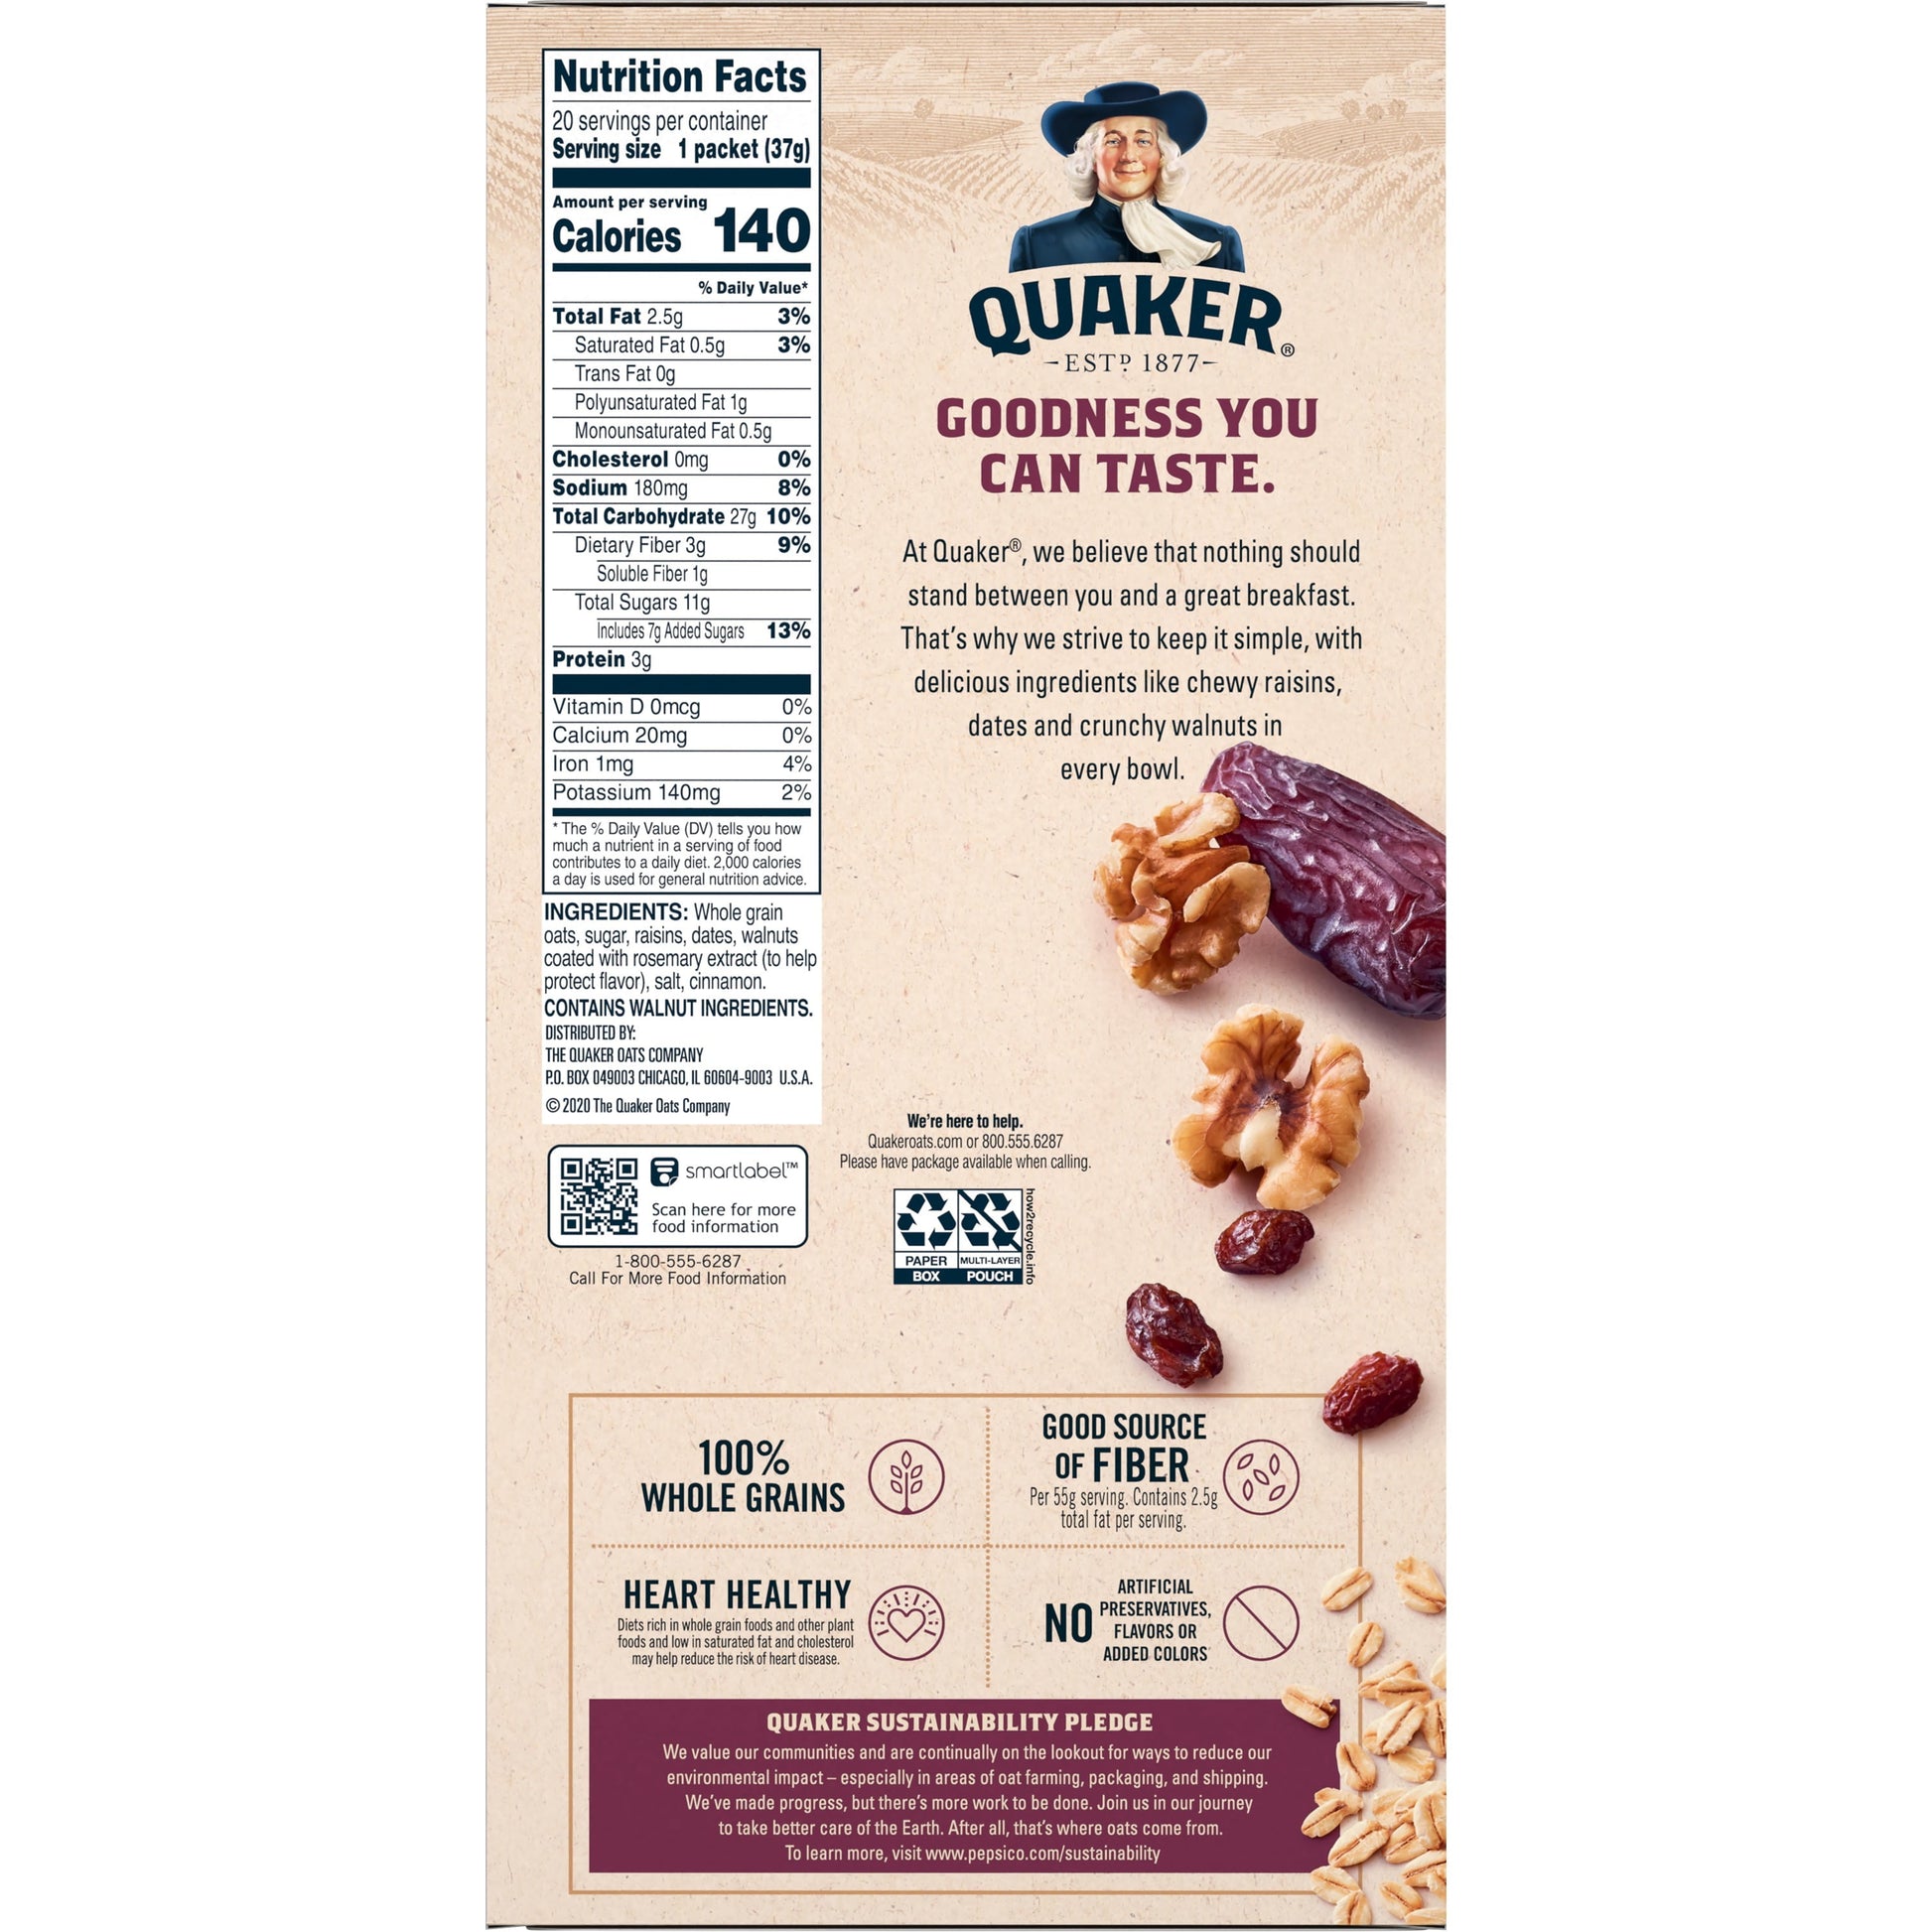 , Instant Oatmeal, Raisin, Date & Walnut, 1.30 Oz, 20 Packets